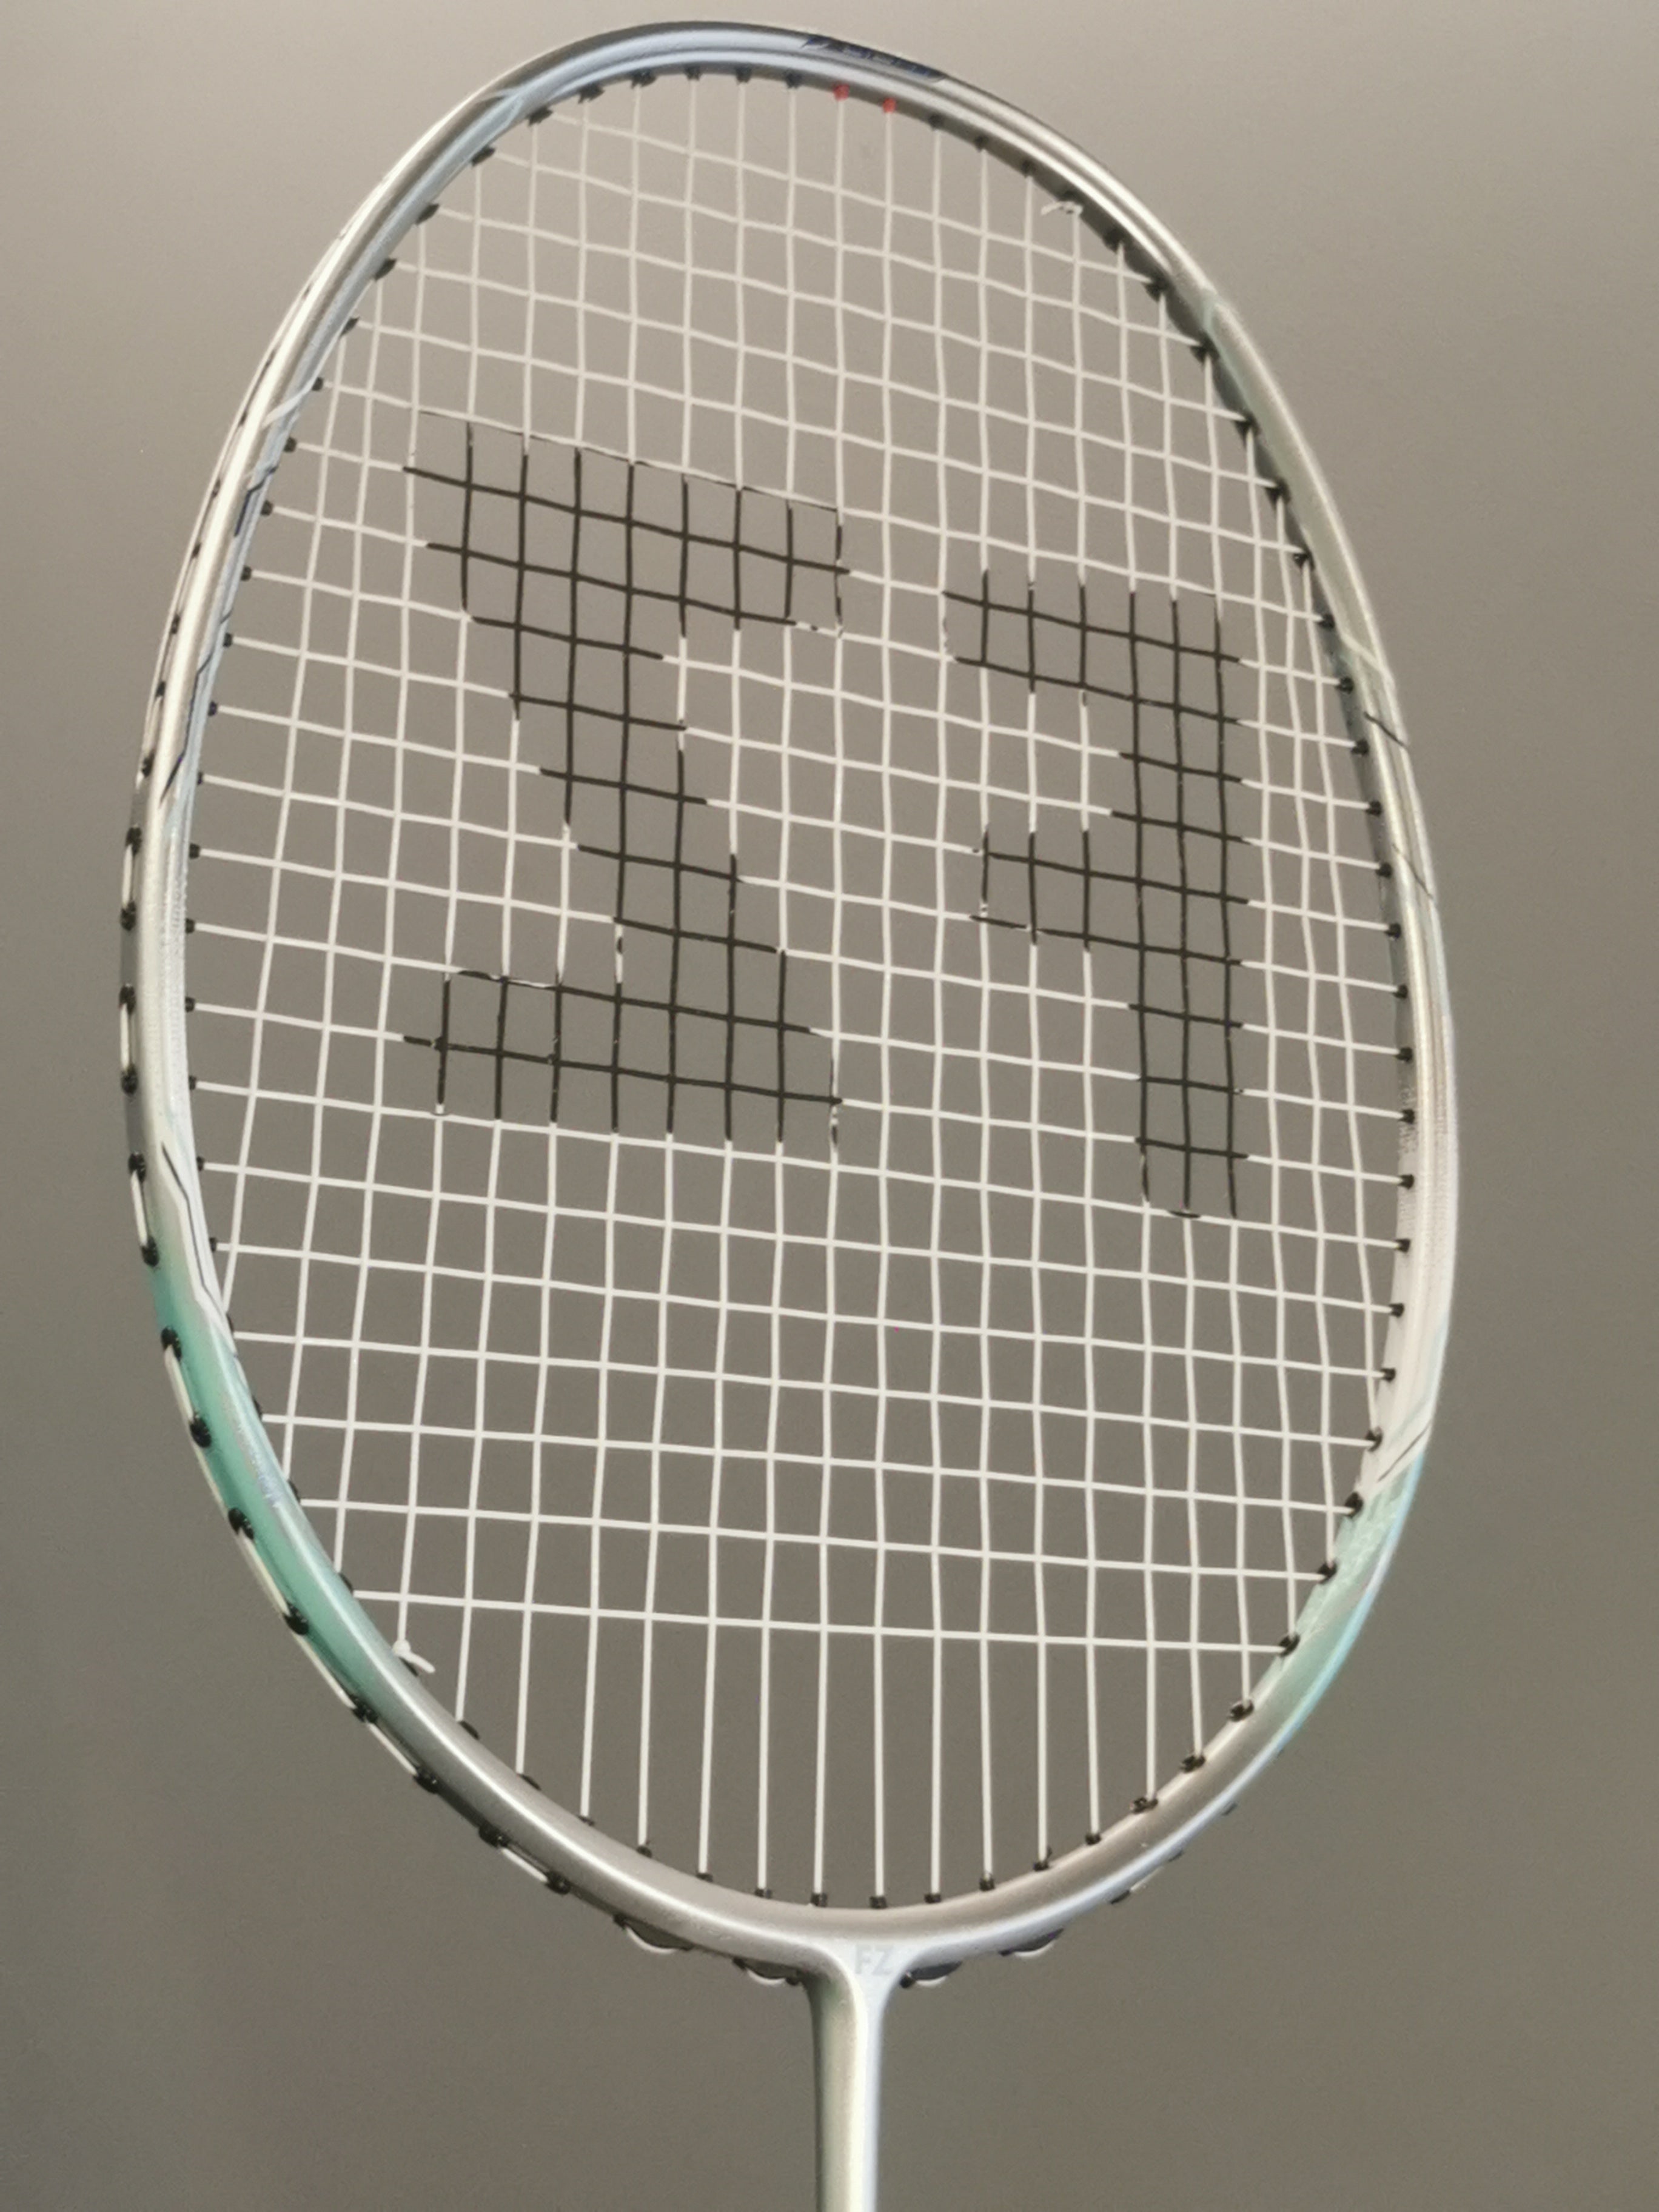 FZ Forza racket pure light 6 badminton racket | badminton racket review